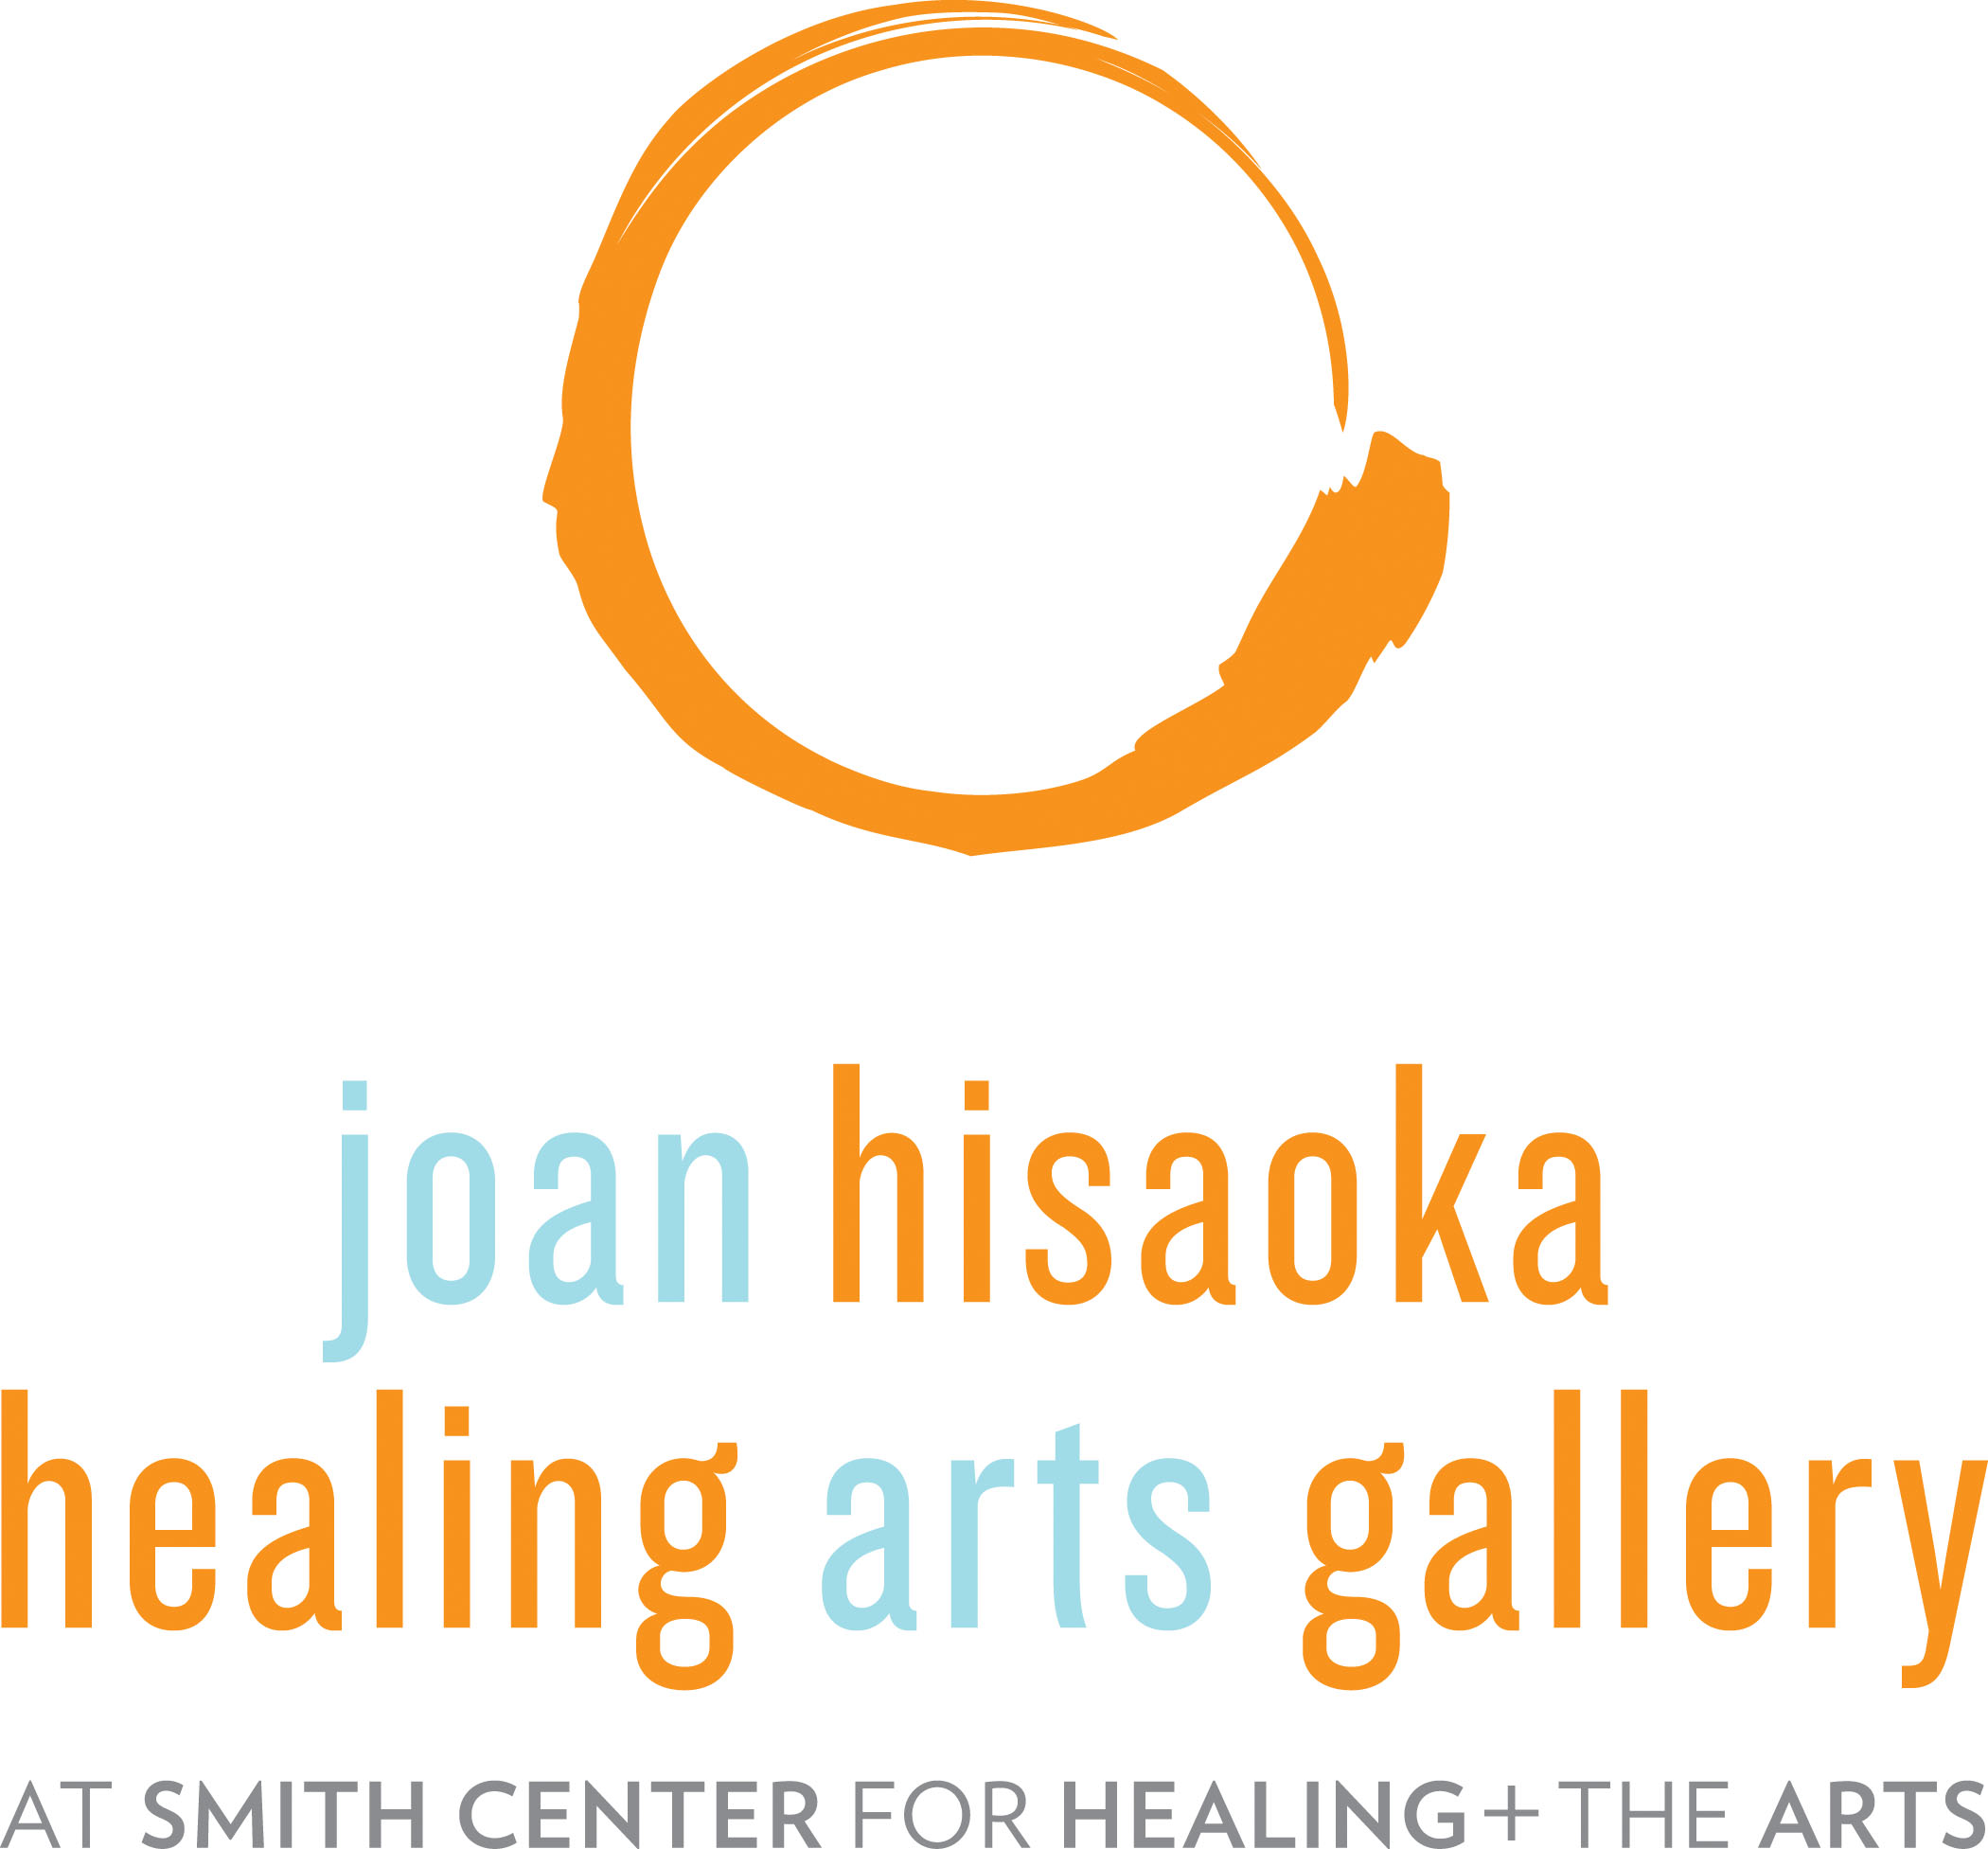 Joan Hisaoka Healing Arts Gallery